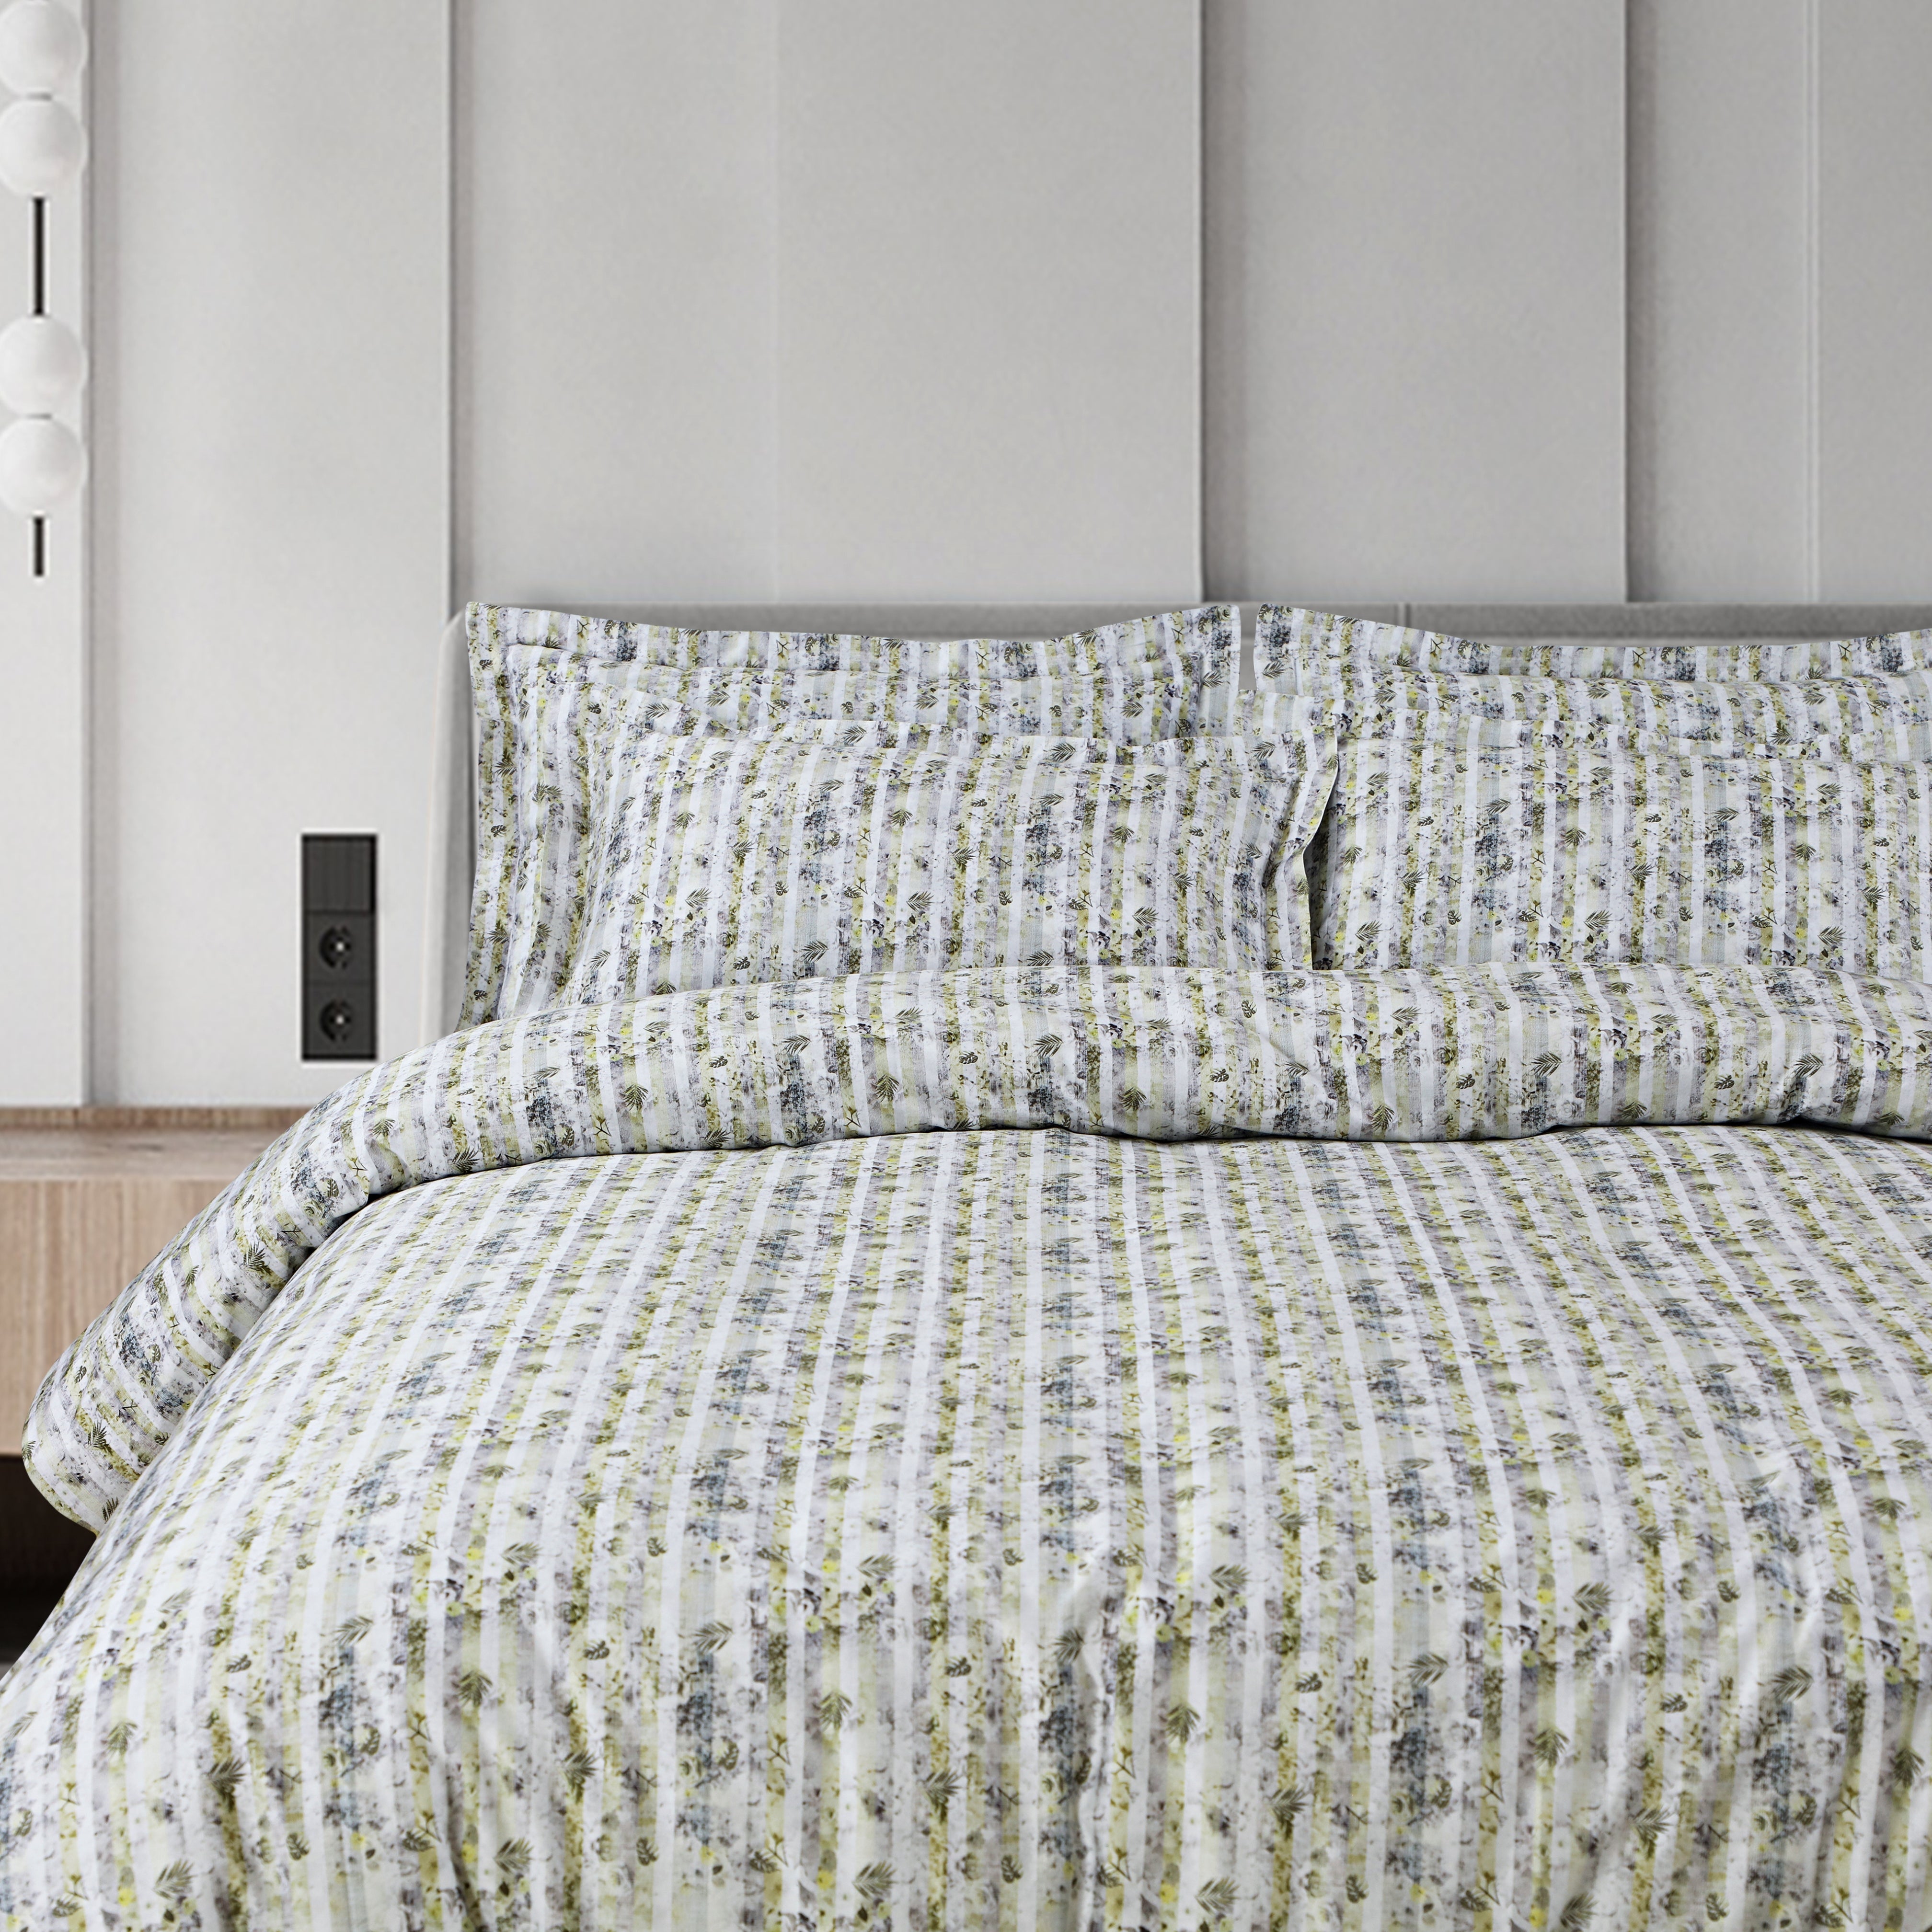 Malako Caèn White & Green Abstract 400 TC 100% Cotton King Size Bedsheet/Duvet Cover